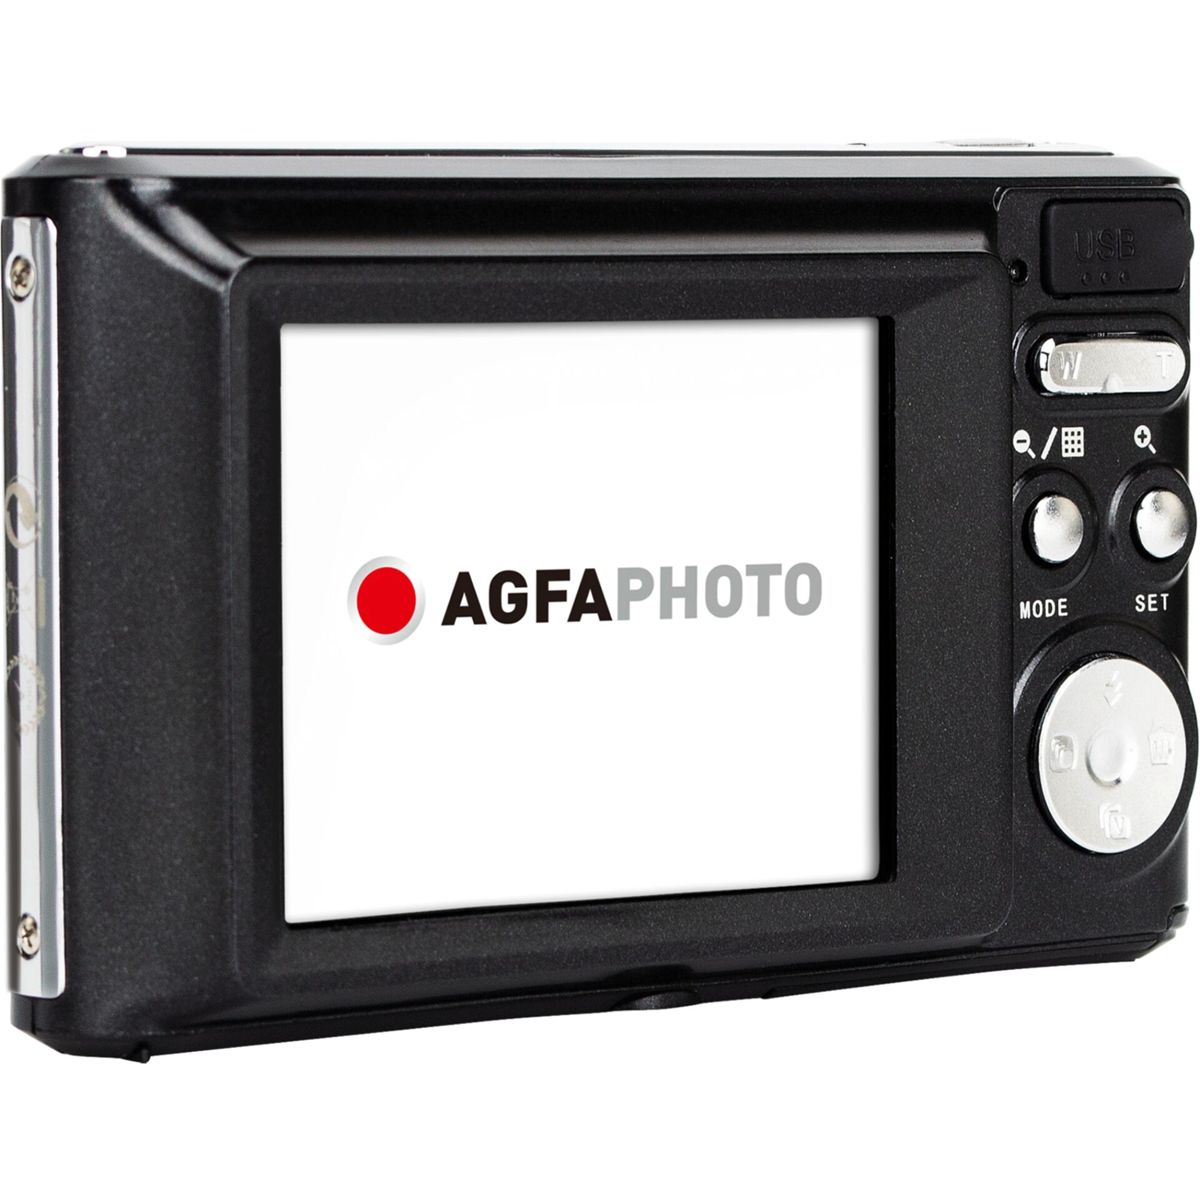 schwarz, Compact 8 TFT Cam AGFAPHOTO Zoom, x Digitalkamera DC5200 LCL Display- opt.